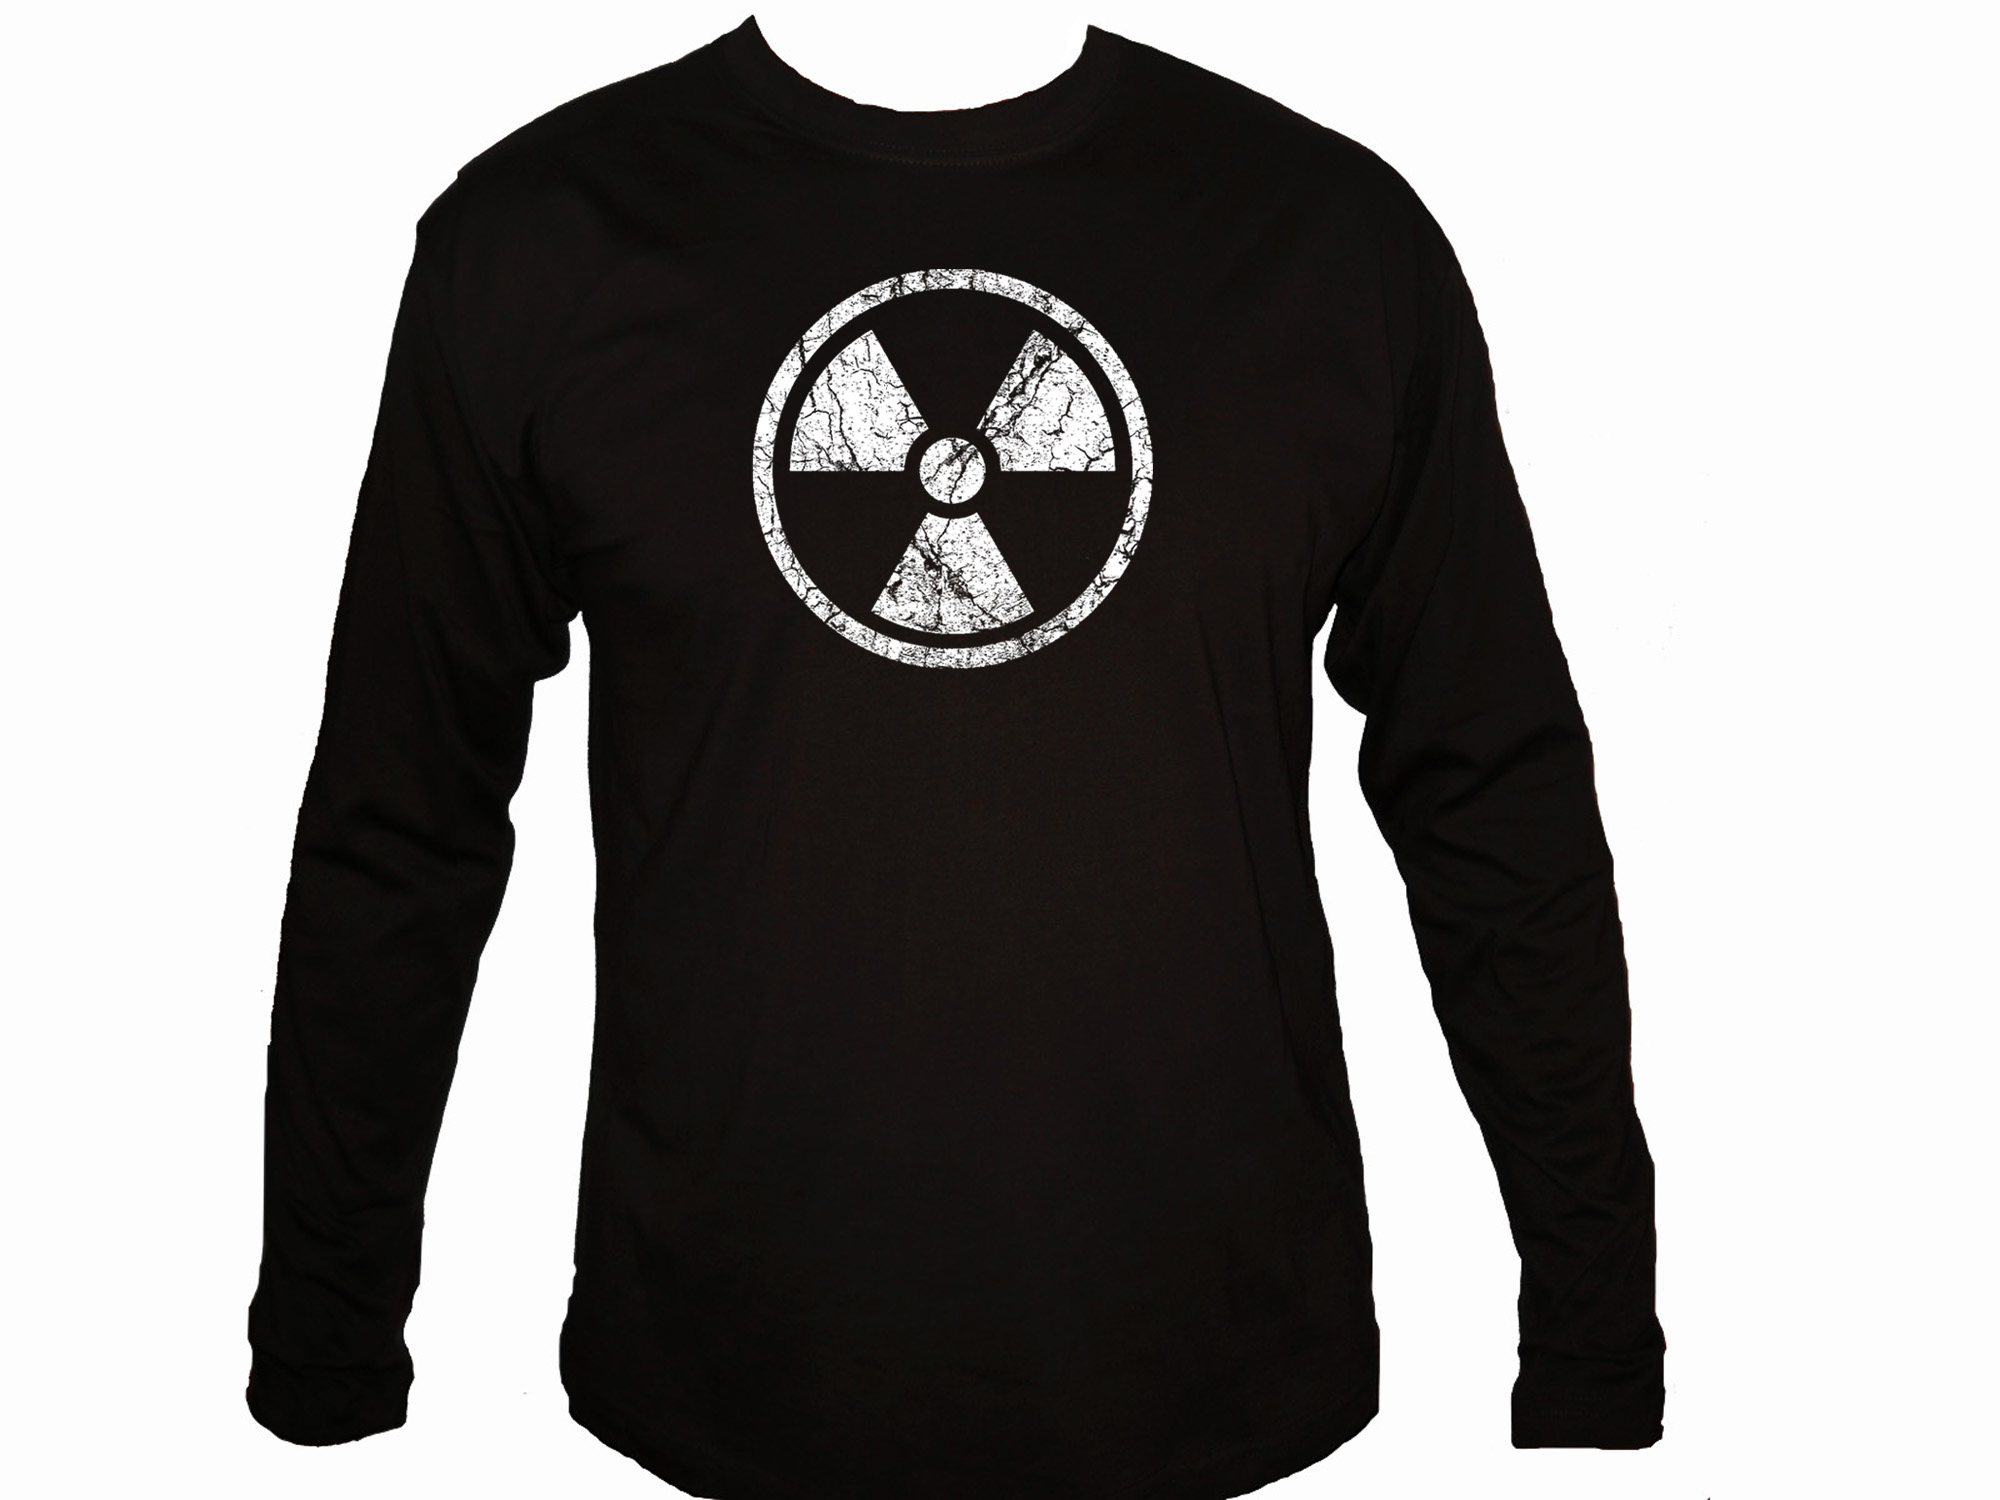 Radioactive mass destruction weapon logo sleeved t shirt